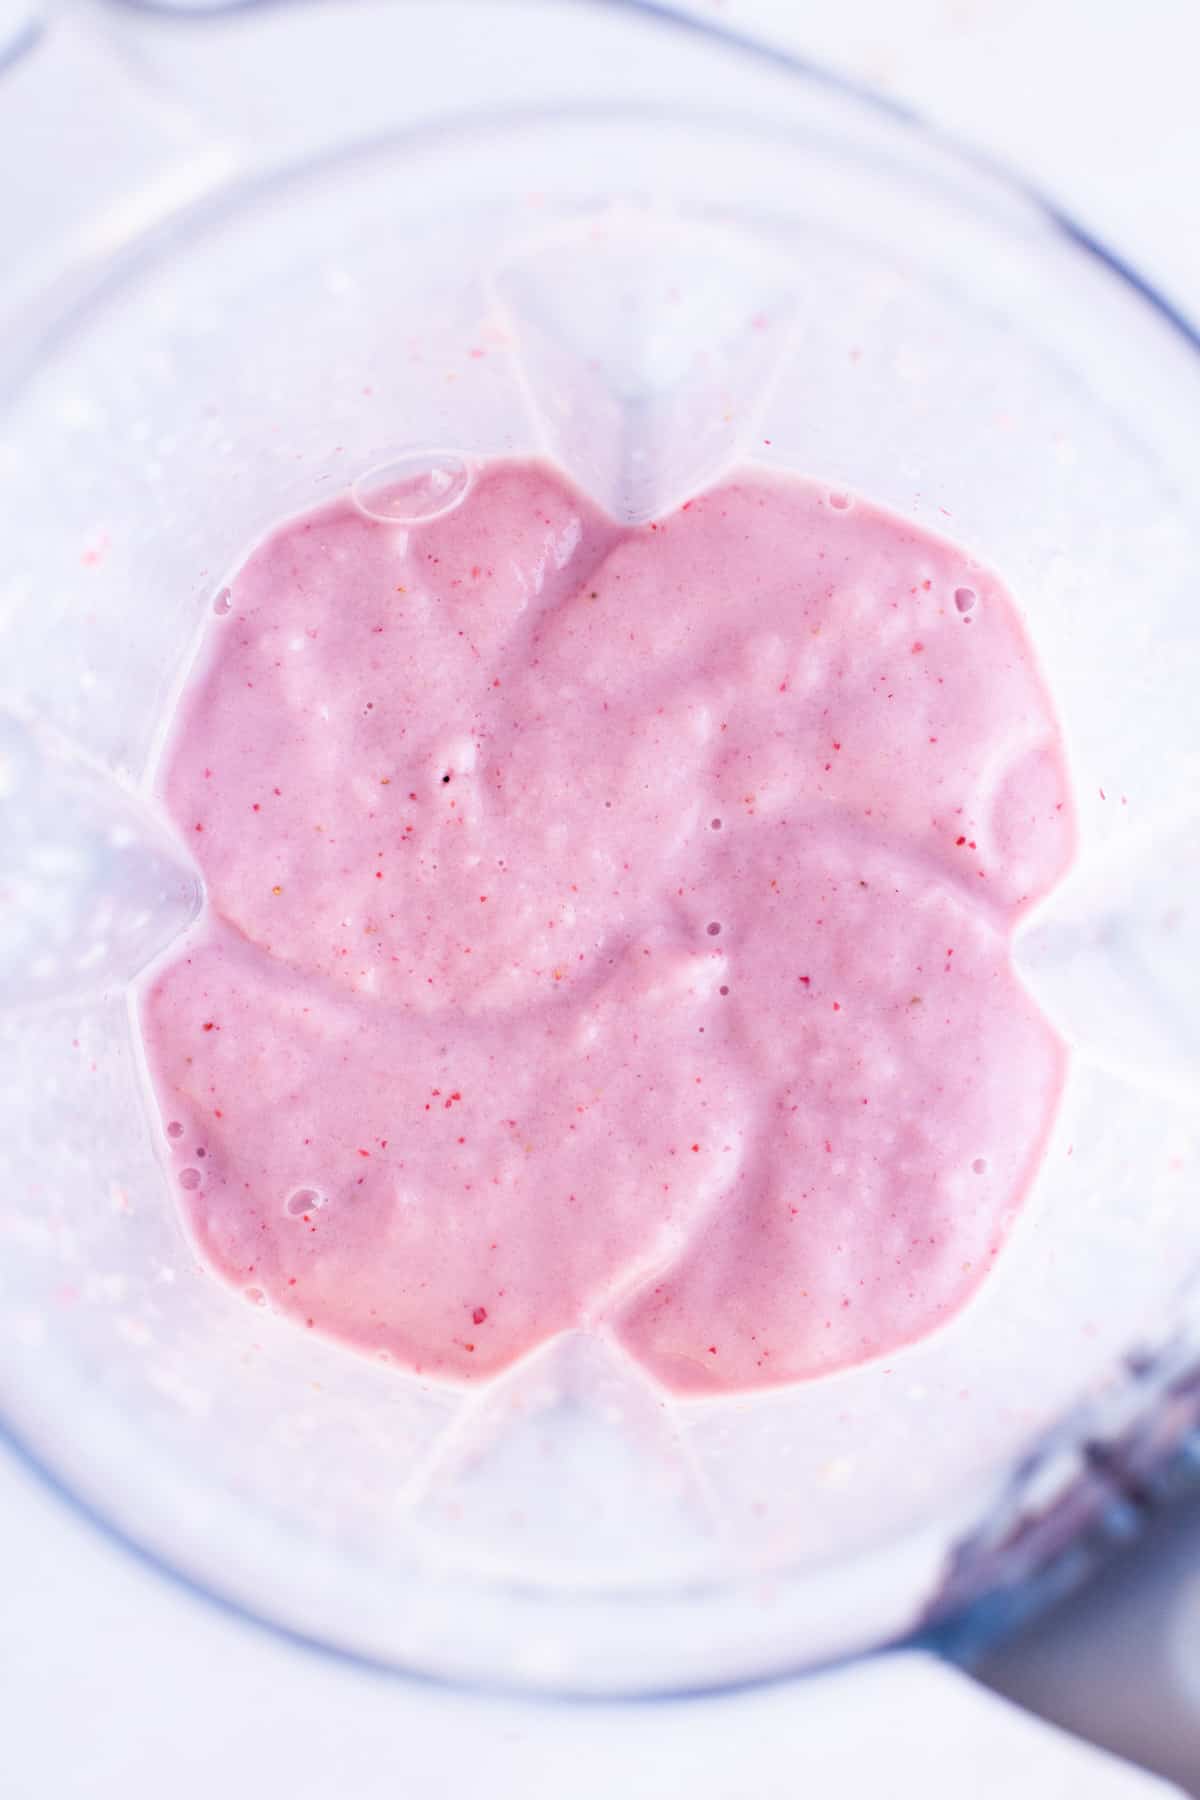 Blended strawberry smoothie in blender.